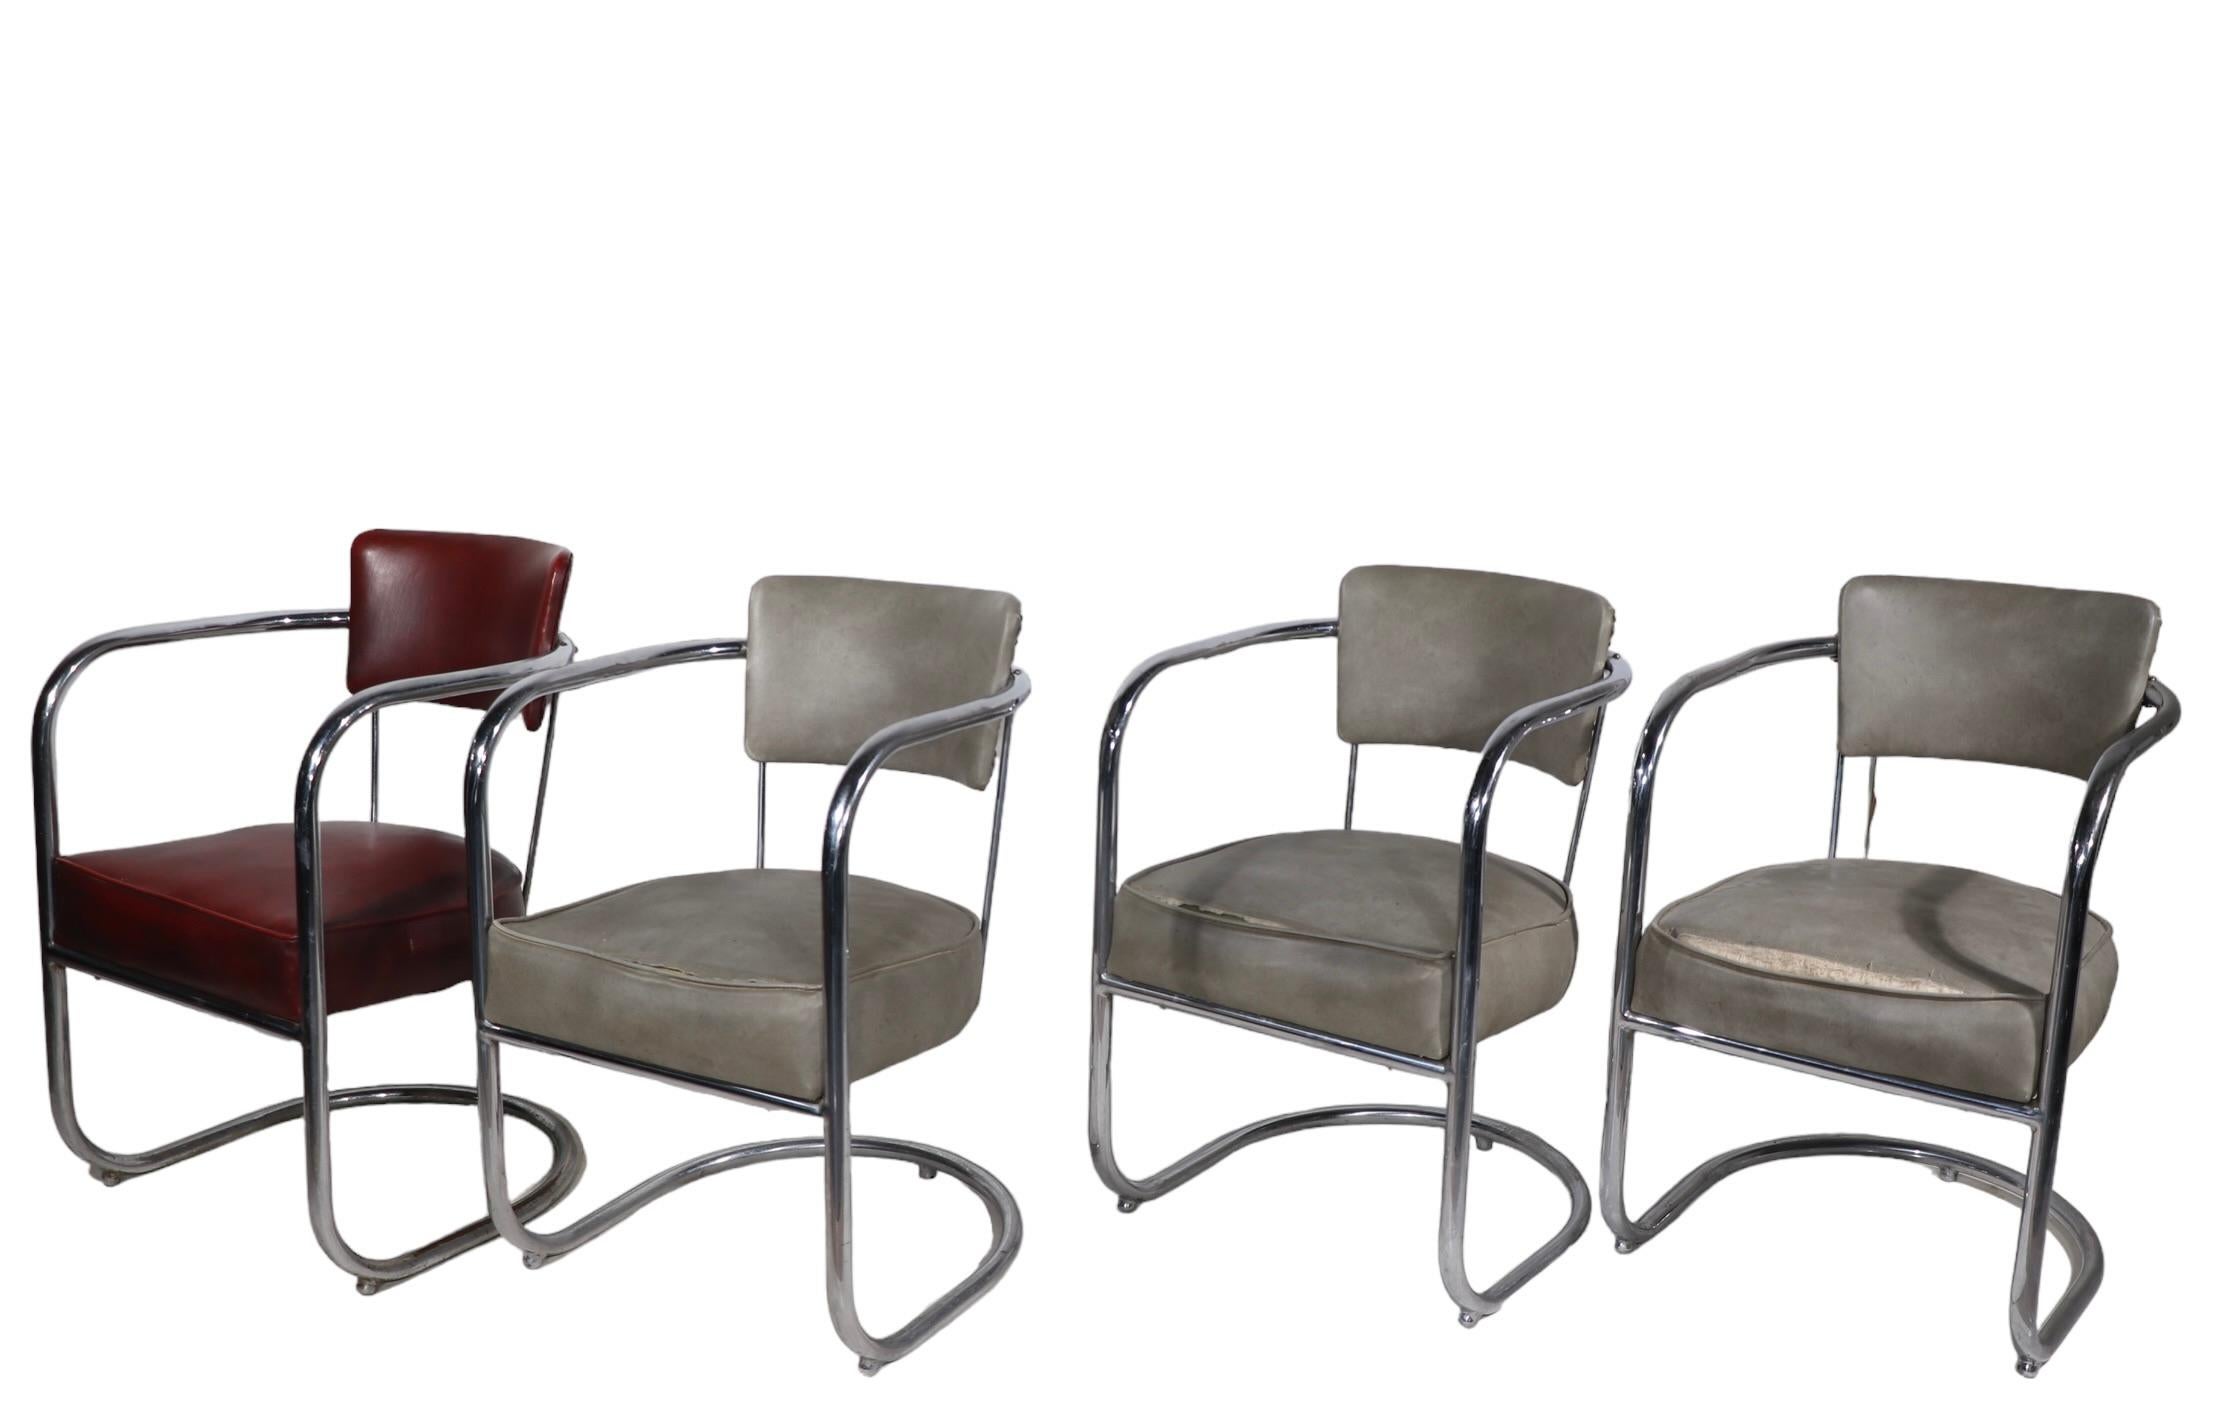 4 Chrome Art Deco Arm Chairs by Lloyd Furniture att. to Kem Weber c.1930's For Sale 10